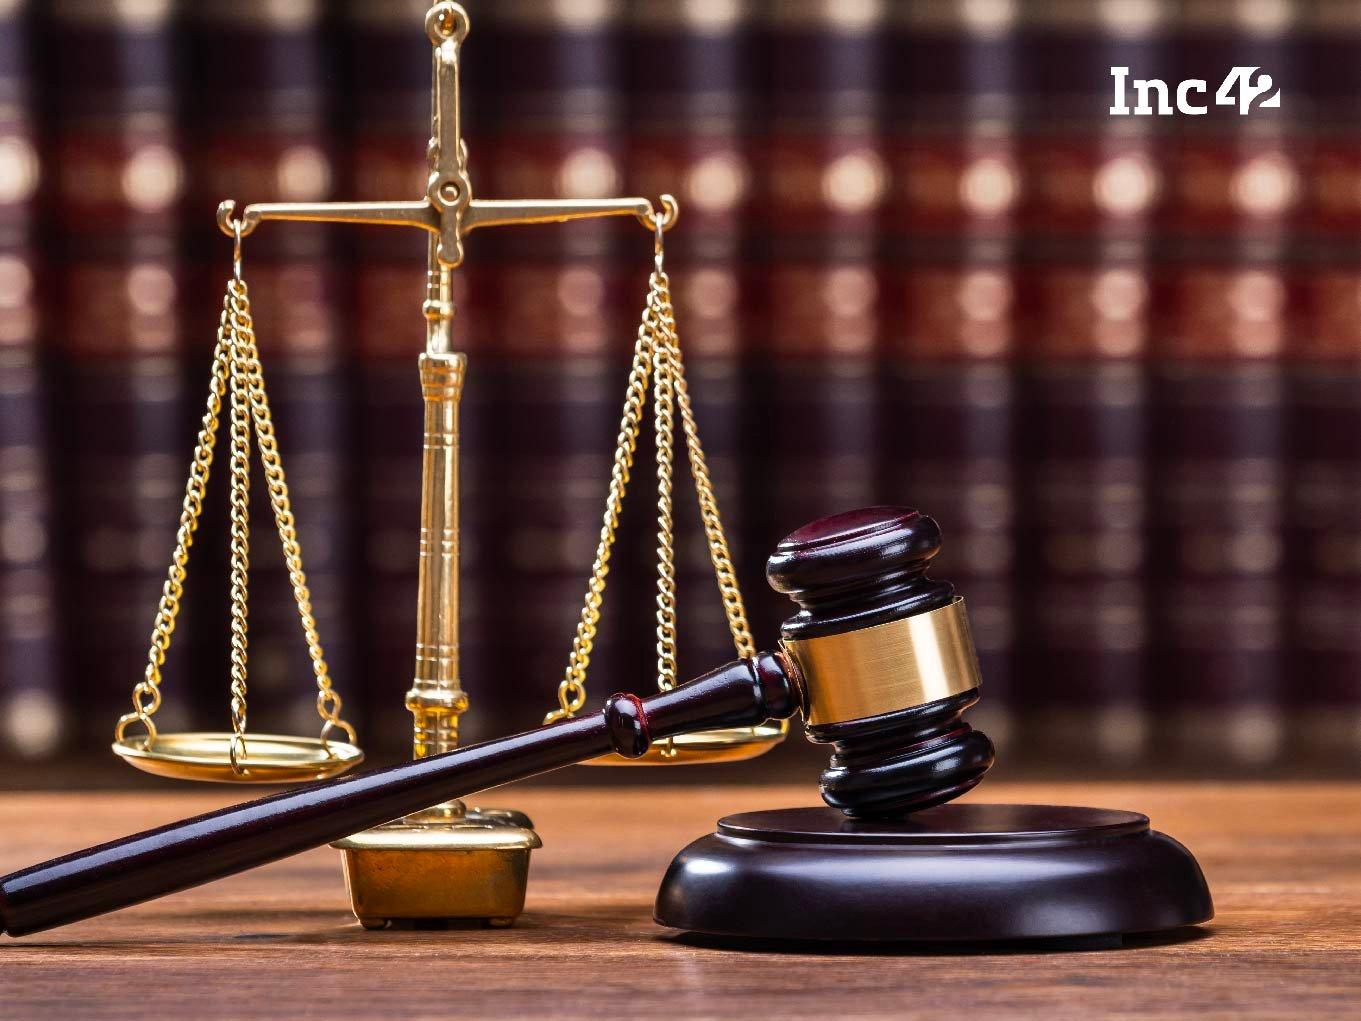 upGrad Files Trademark Infringement Suit Against Scaler, Gets Interim Relief From Delhi HC